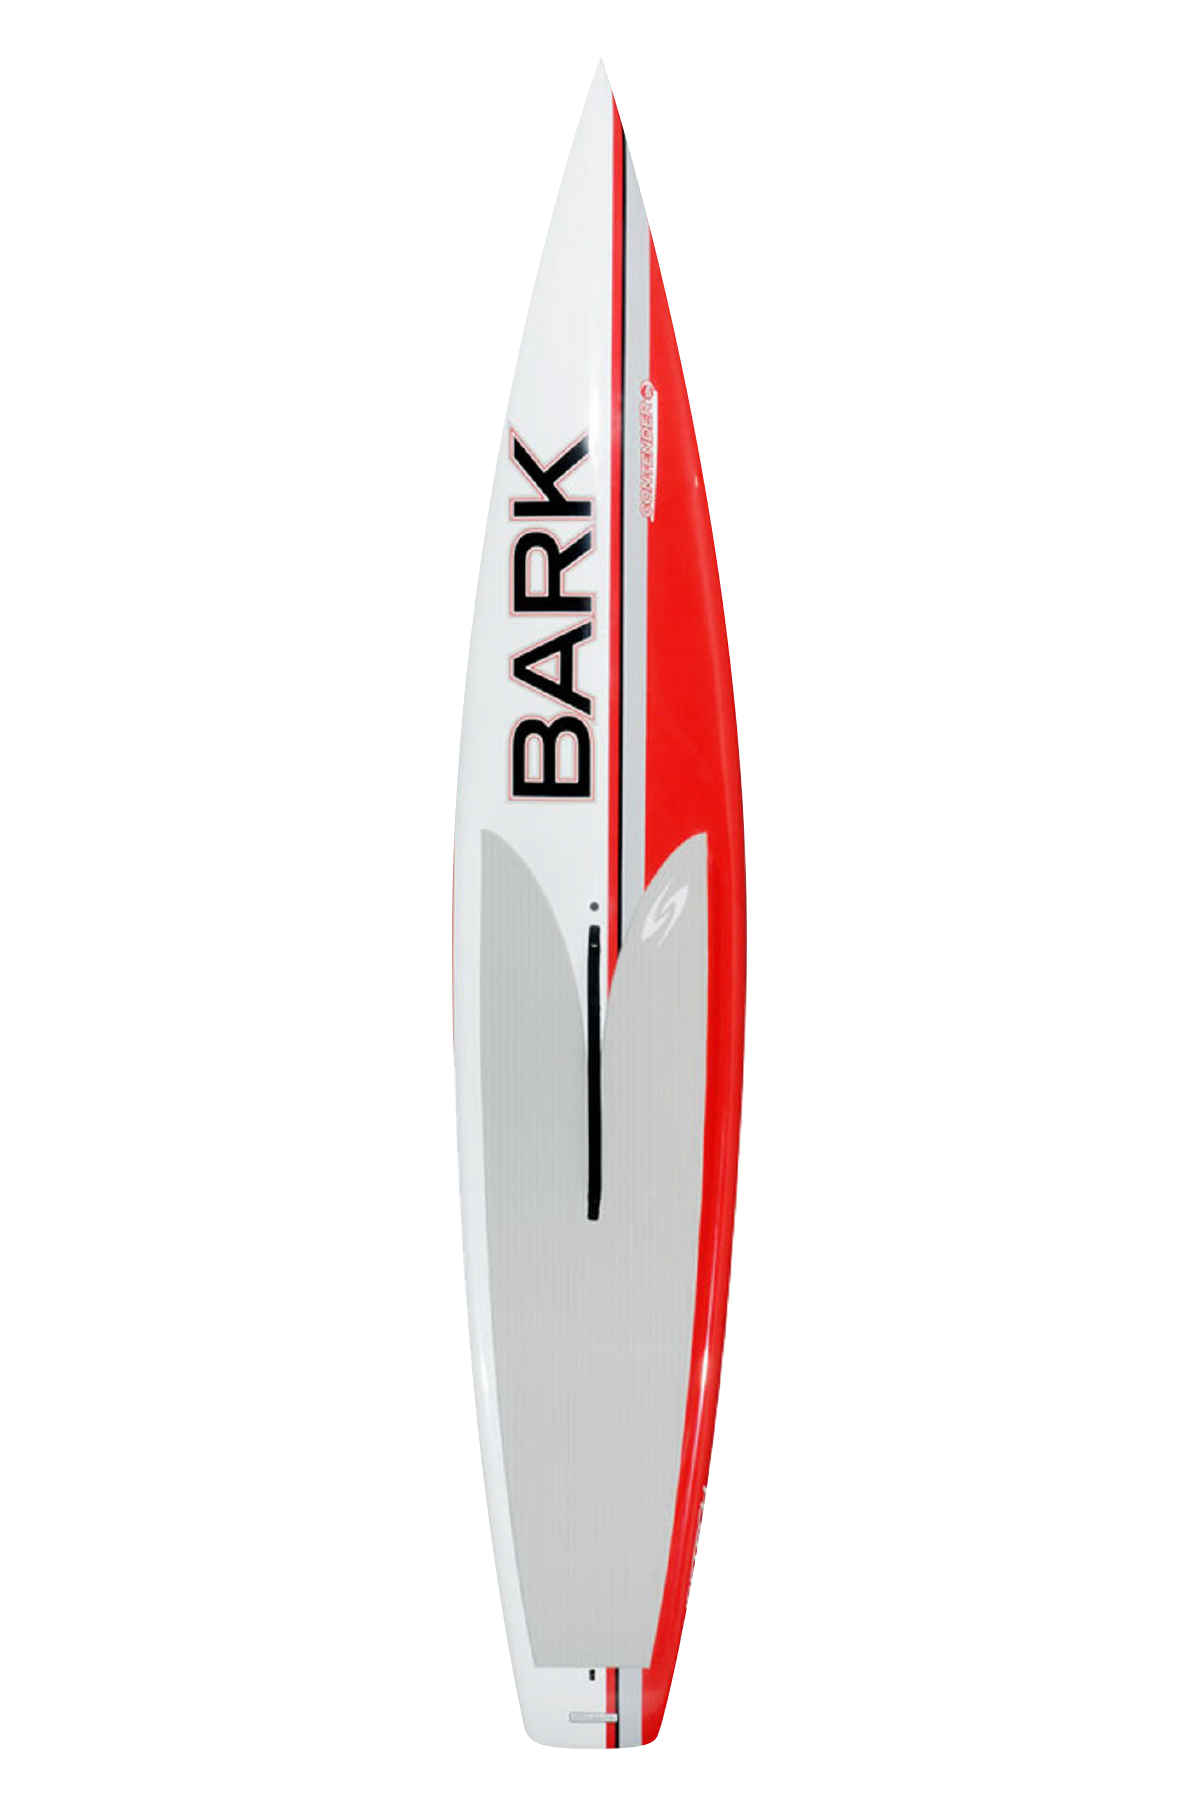 12 6 SURFTECH SUP CONTENDER RACE - BARK ELITE  - 26.8